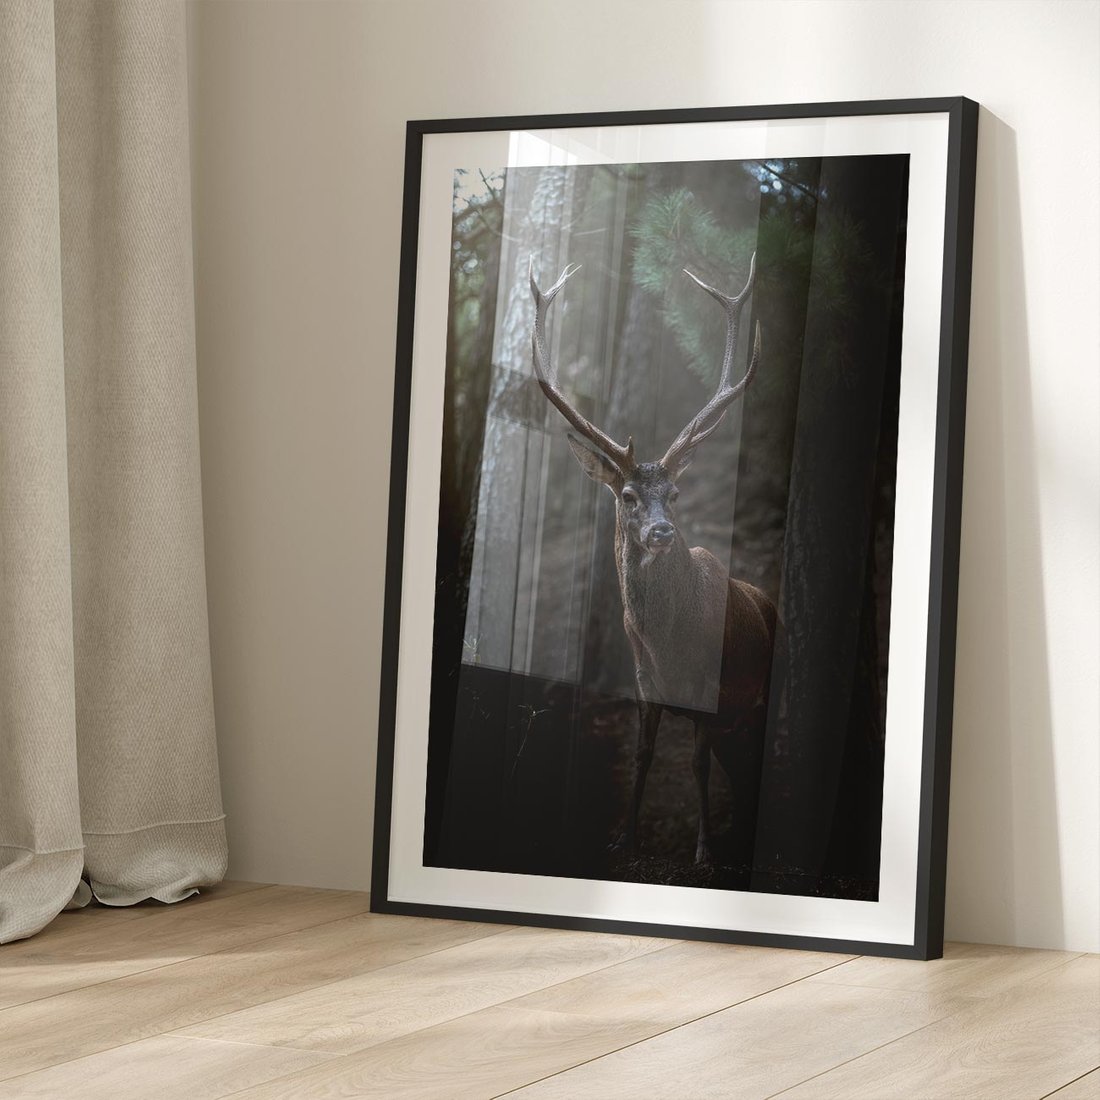 Plakat w ramie 30x40 - Jeleń wśród lasu - jeleń, las - rama czarna